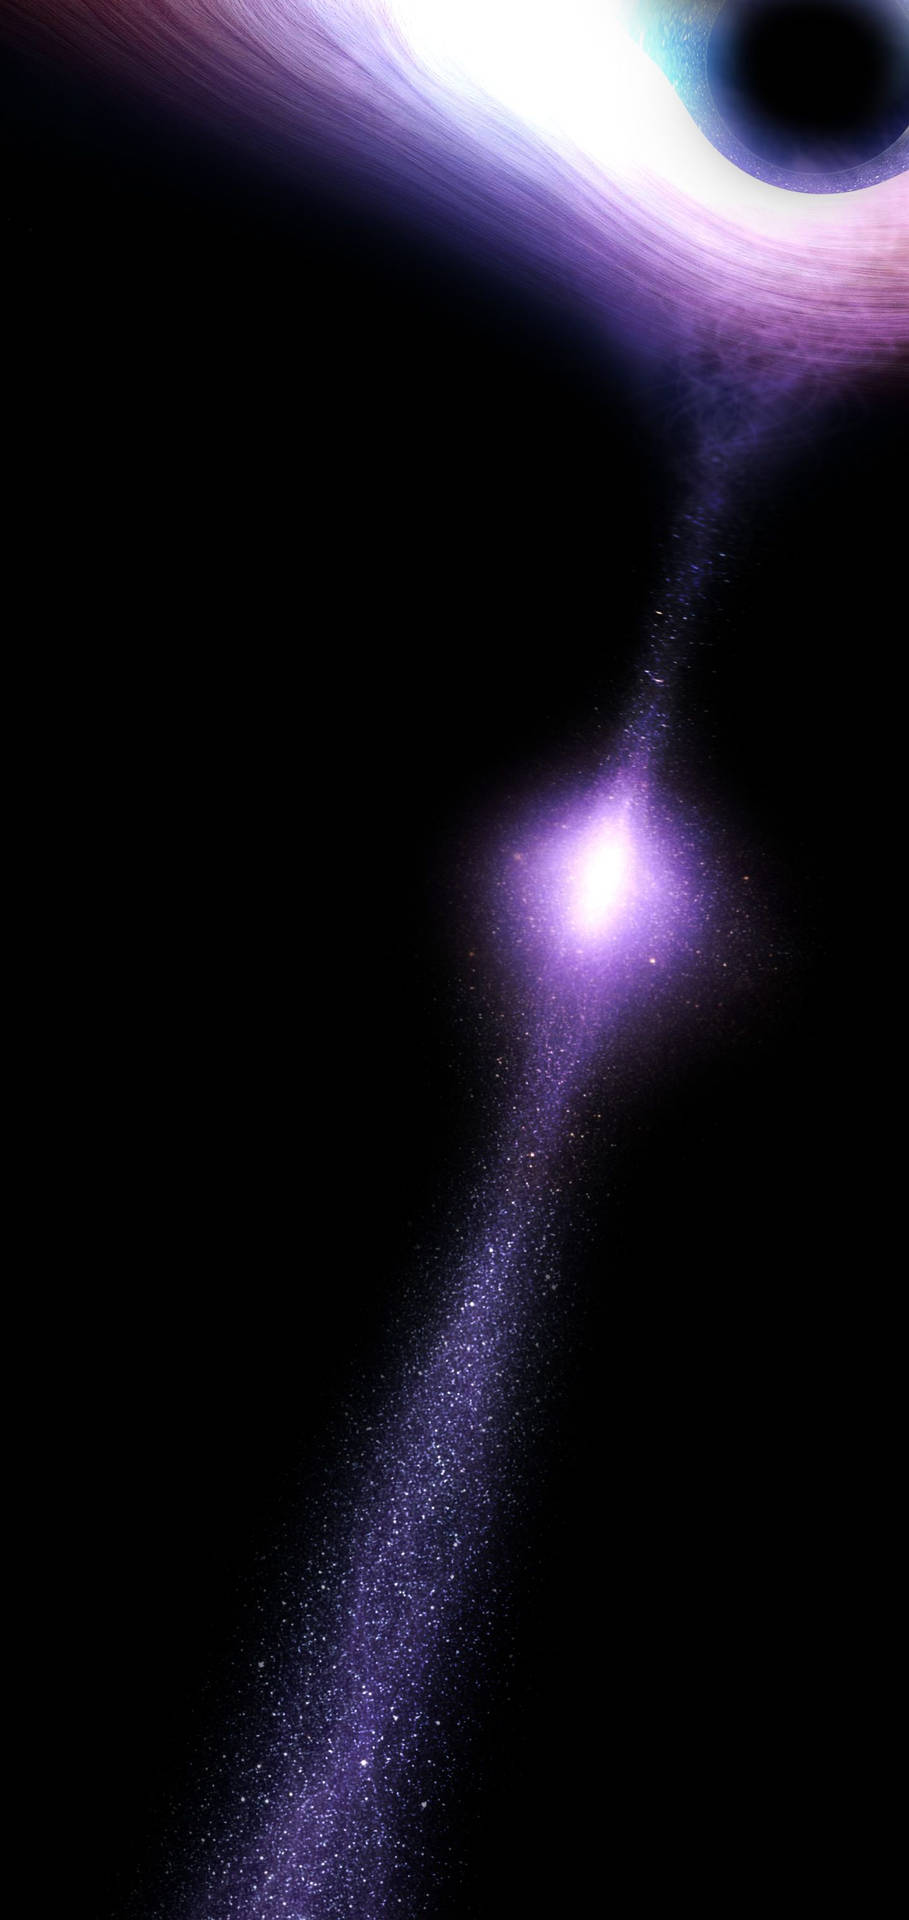 Galaxy S10 Massive Quasar Black Hole Background